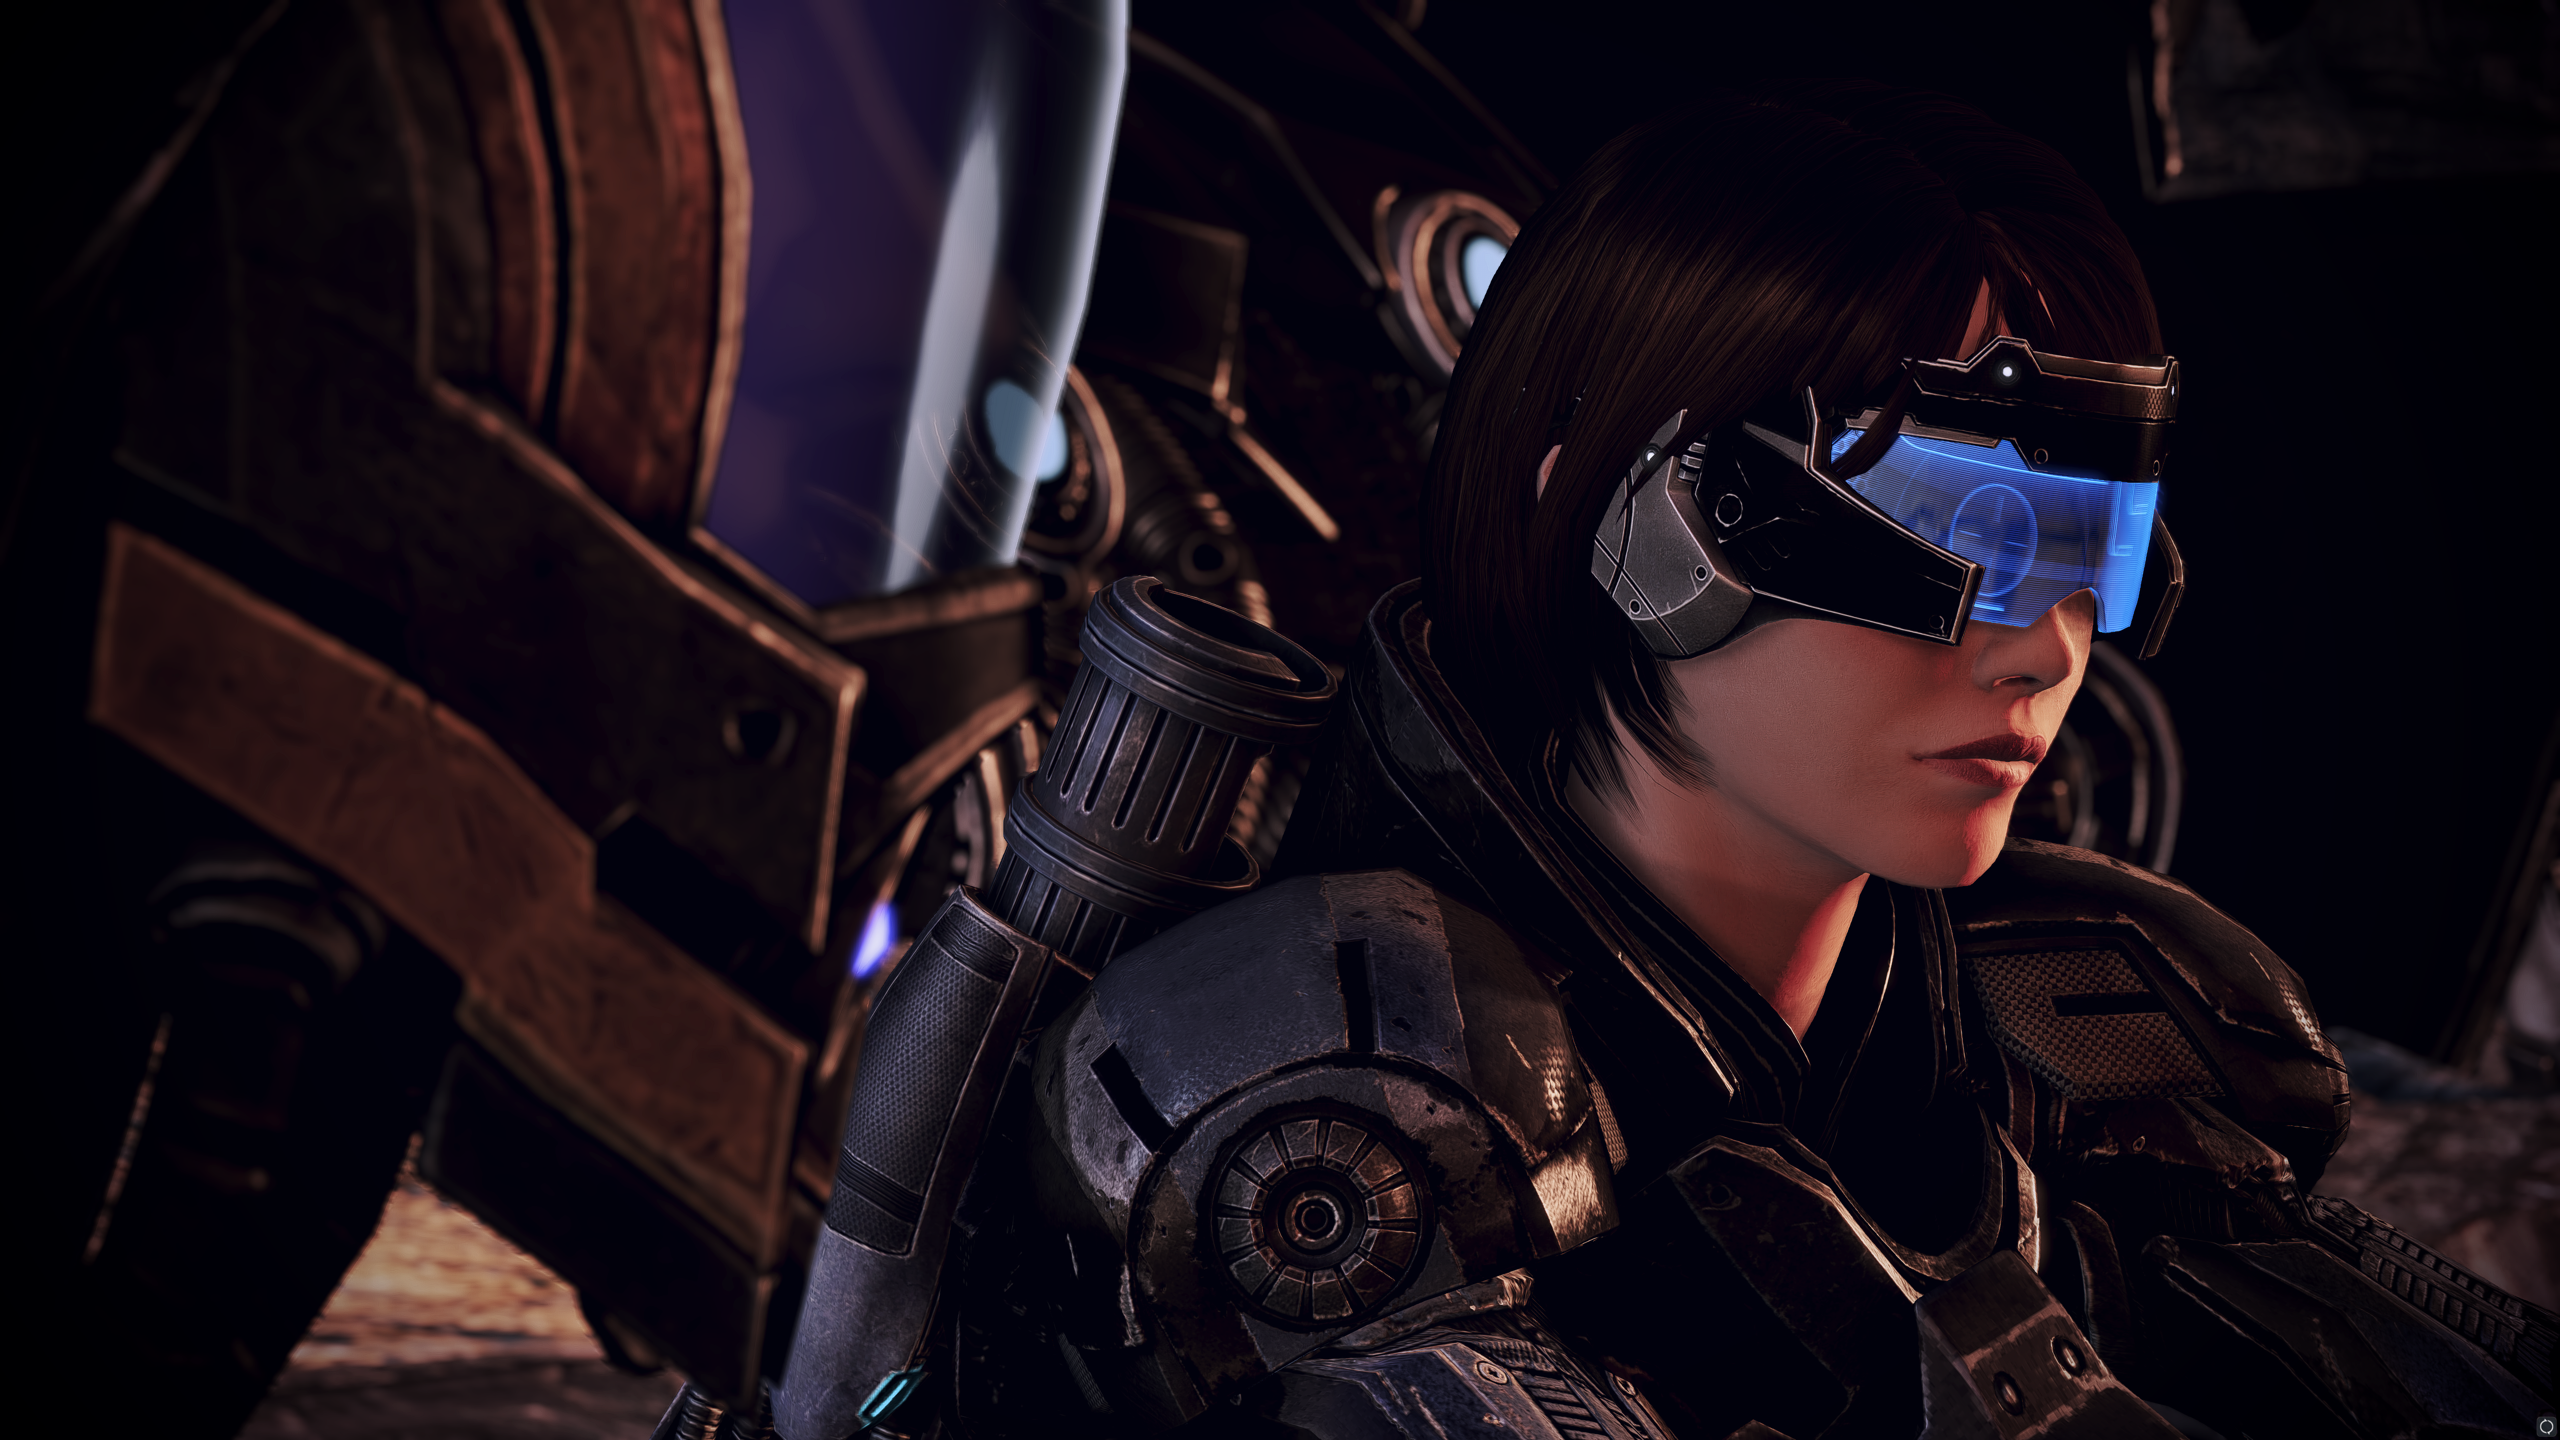 General 2560x1440 video games CGI Mass Effect Mass Effect 3 Commander Shepard video game art screen shot video game characters technology short hair armor